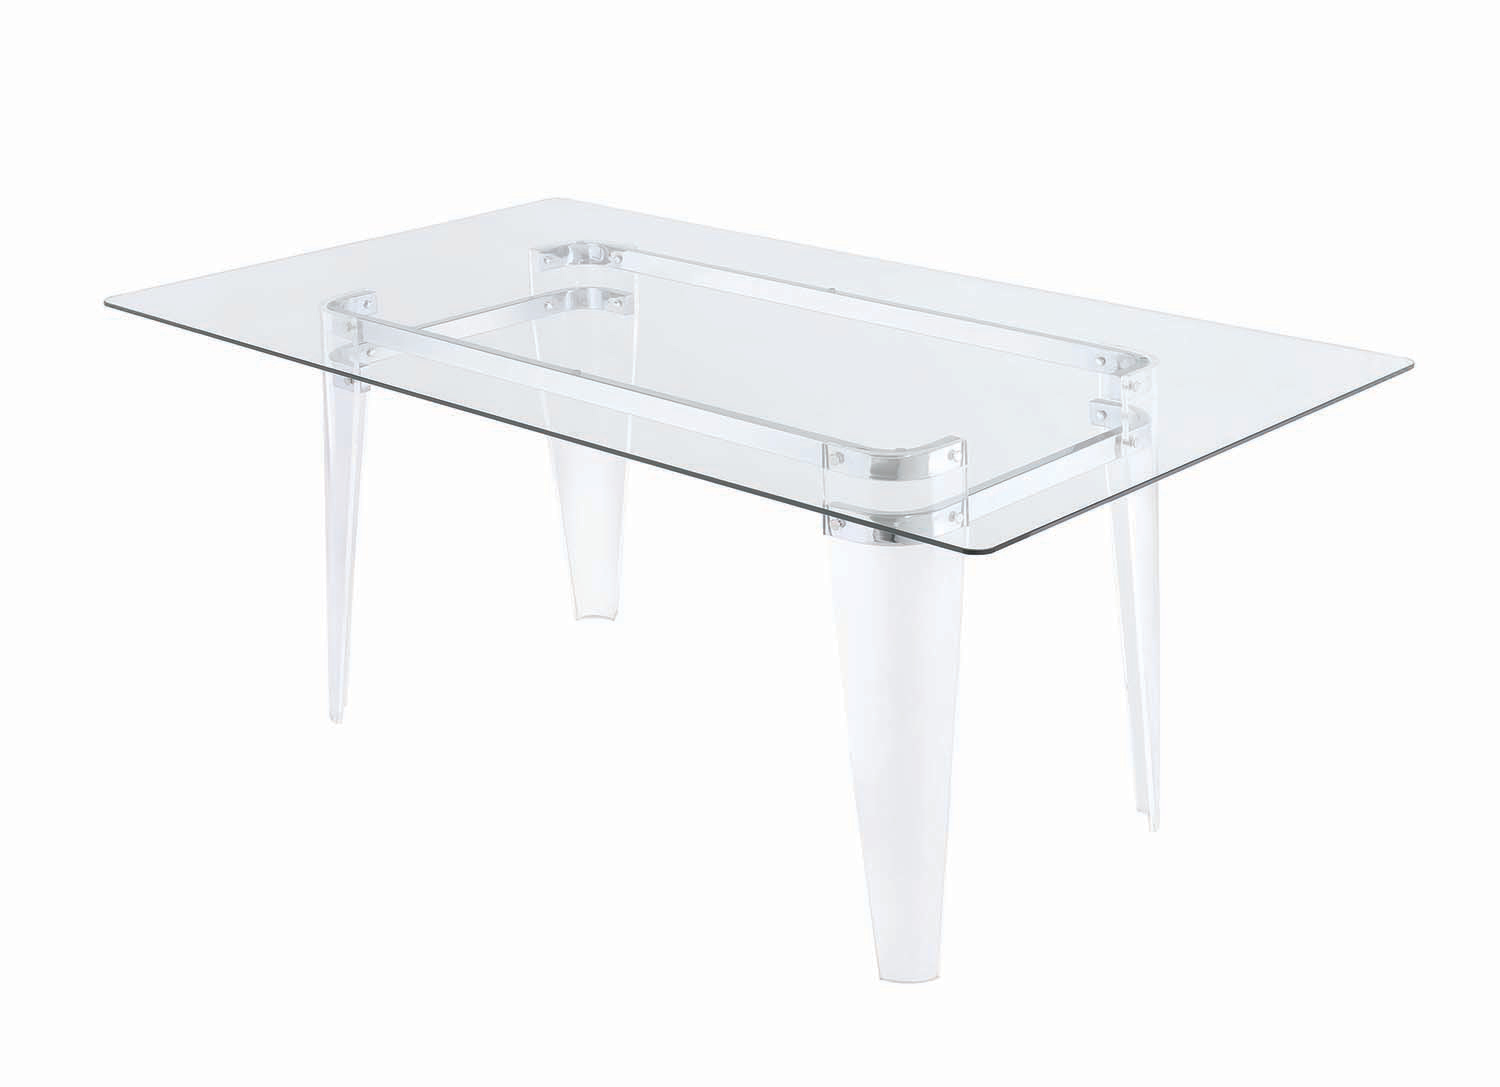 Coaster Michonne Rectangular Glass Top Dining Table - Glass Top, Chrome Metal Apron, Acrylic Legs